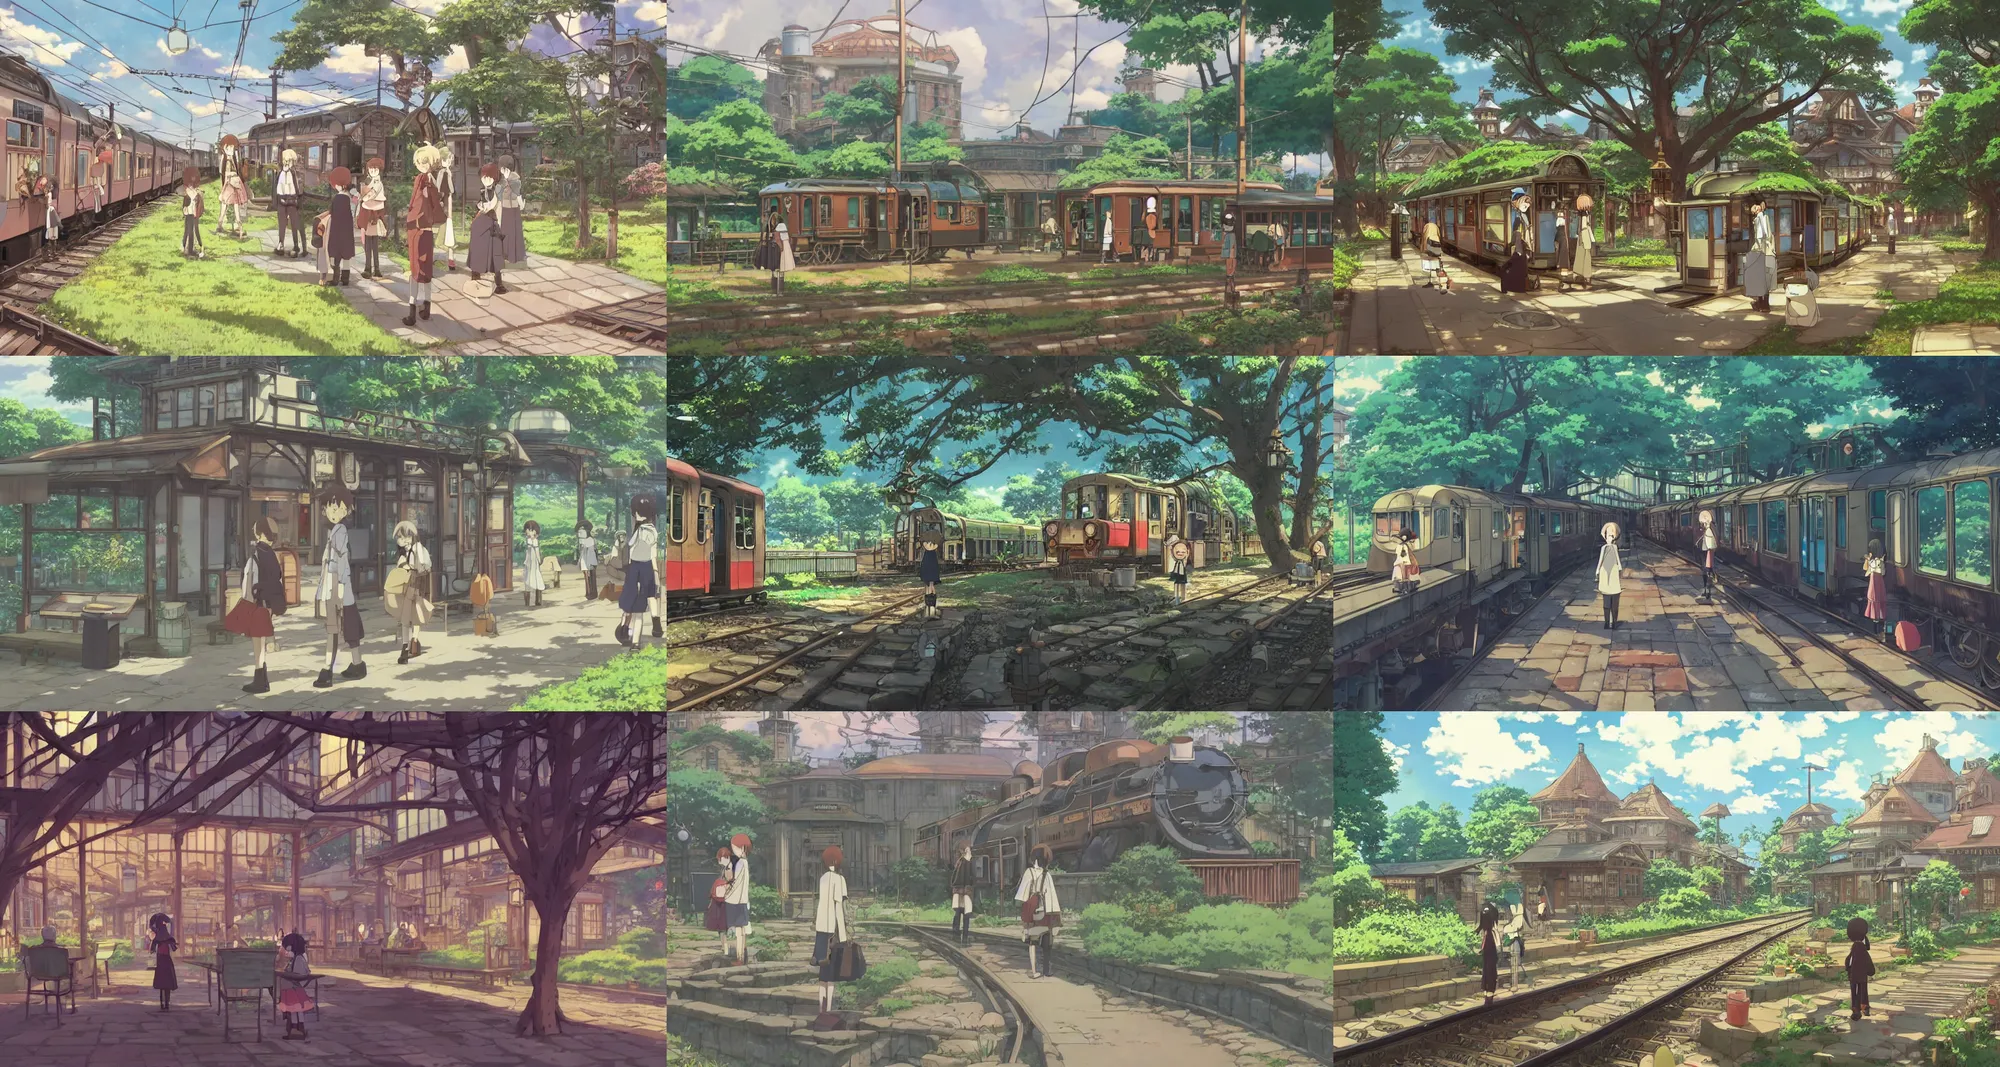 Prompt: beautiful slice of life anime scene of rural steampunk train station, surrounded by nature, relaxing, calm, cozy, peaceful, by mamoru hosoda, hayao miyazaki, makoto shinkai